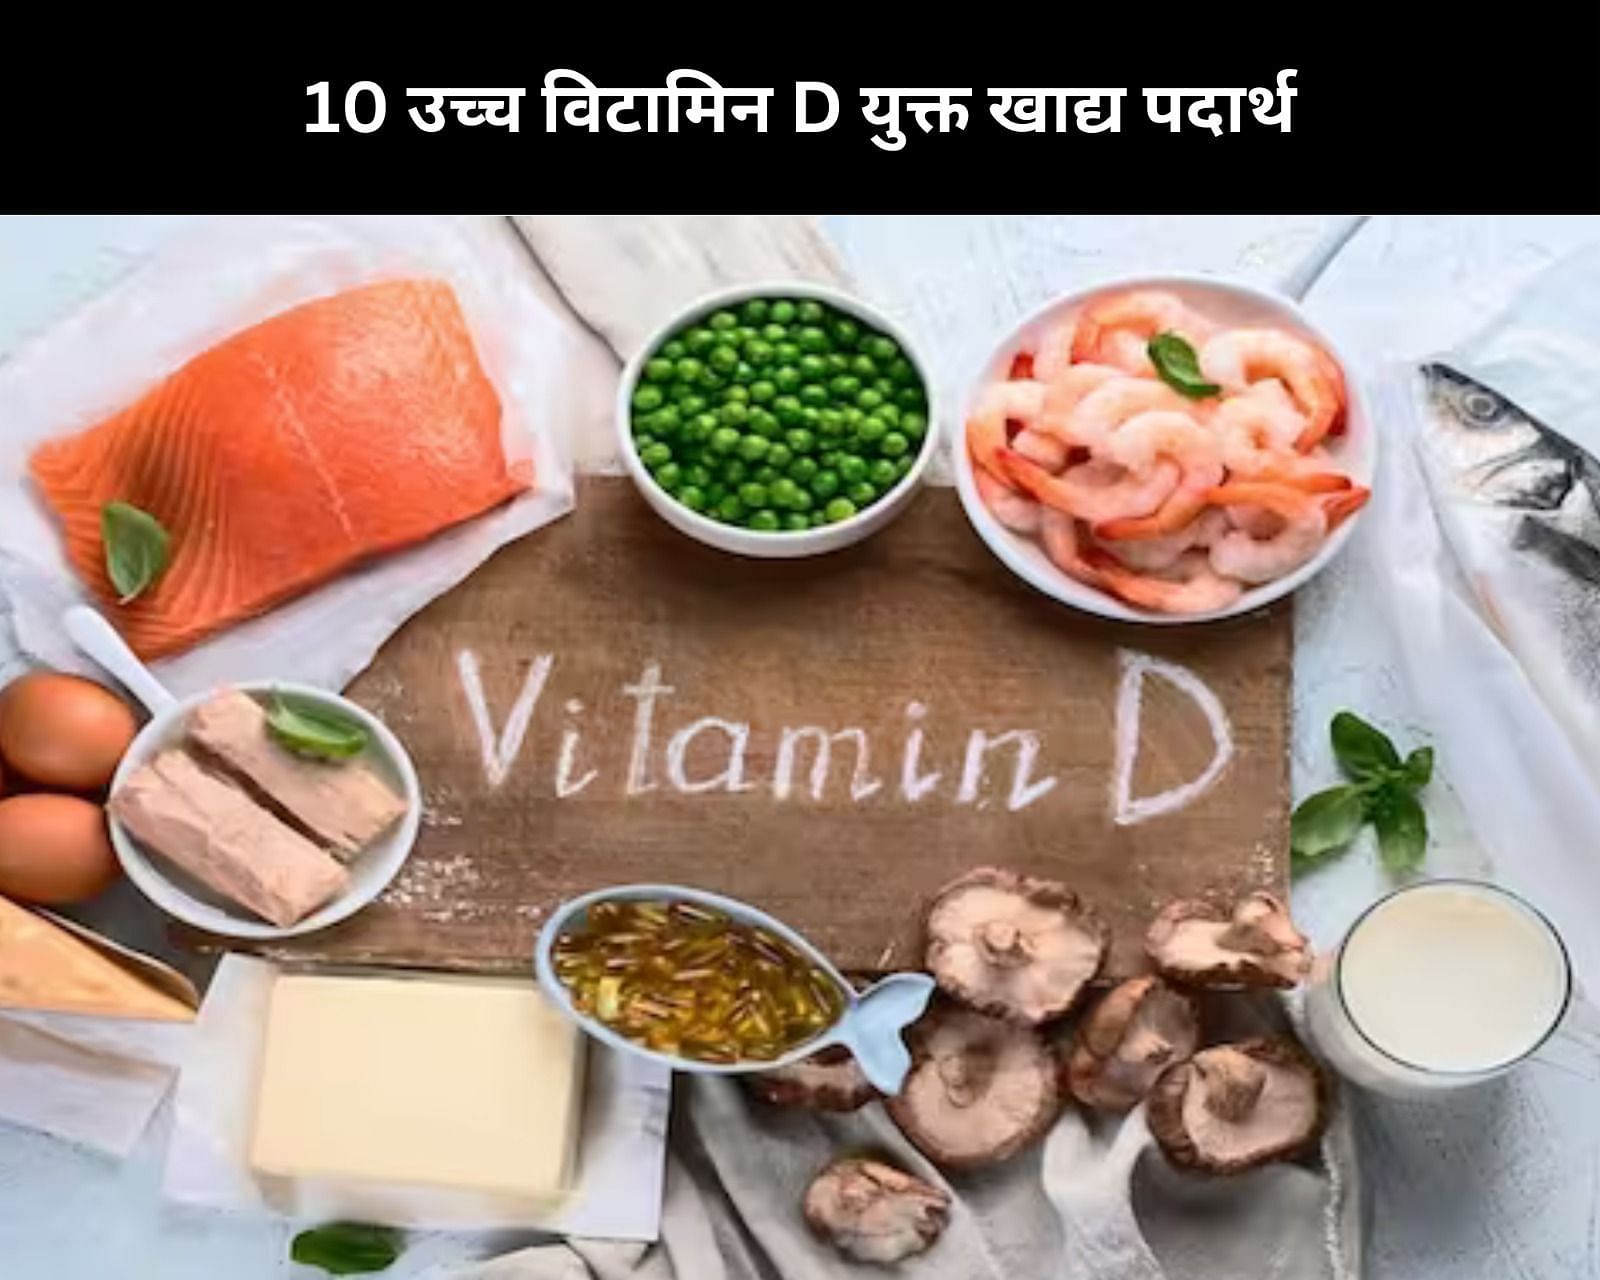 10 उच्च विटामिन D युक्त खाद्य पदार्थ (फोटो - sportskeedaहिन्दी)